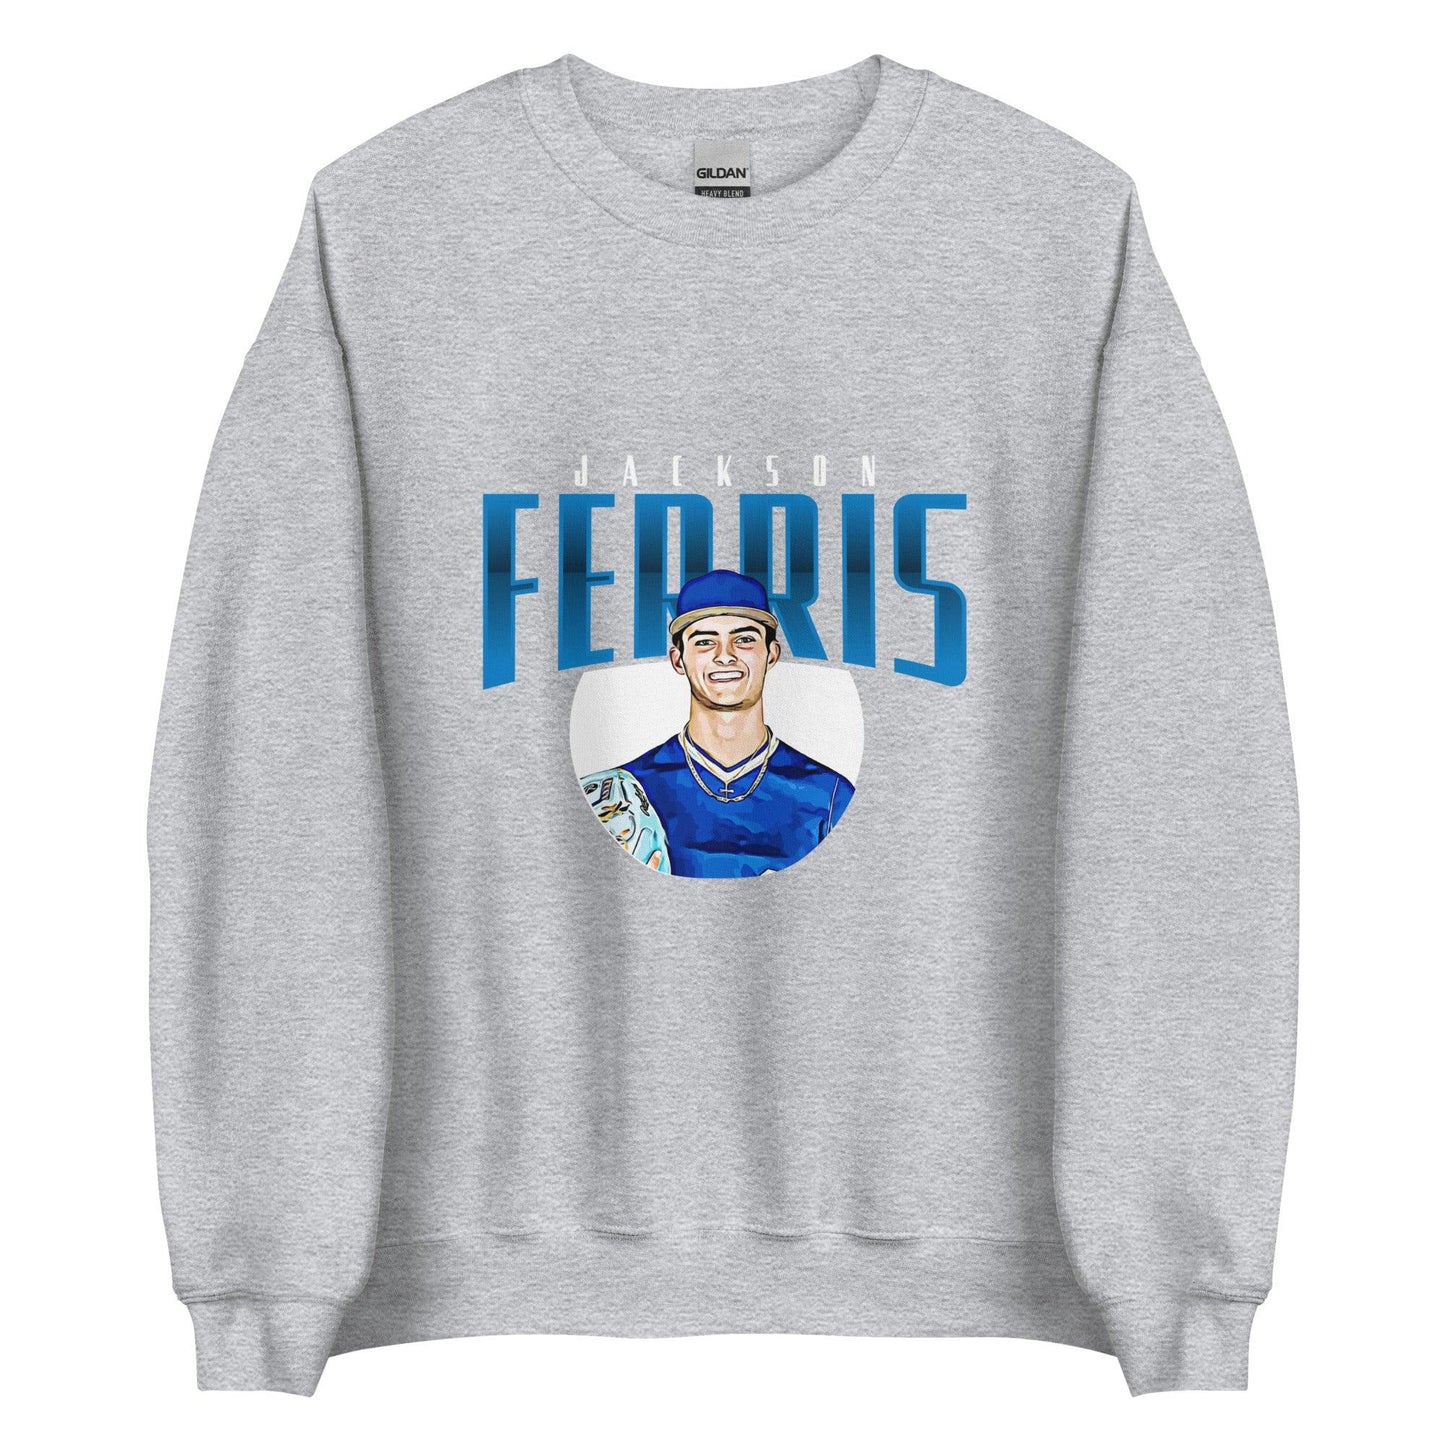 Jackson Ferris “Essential” Sweatshirt - Fan Arch